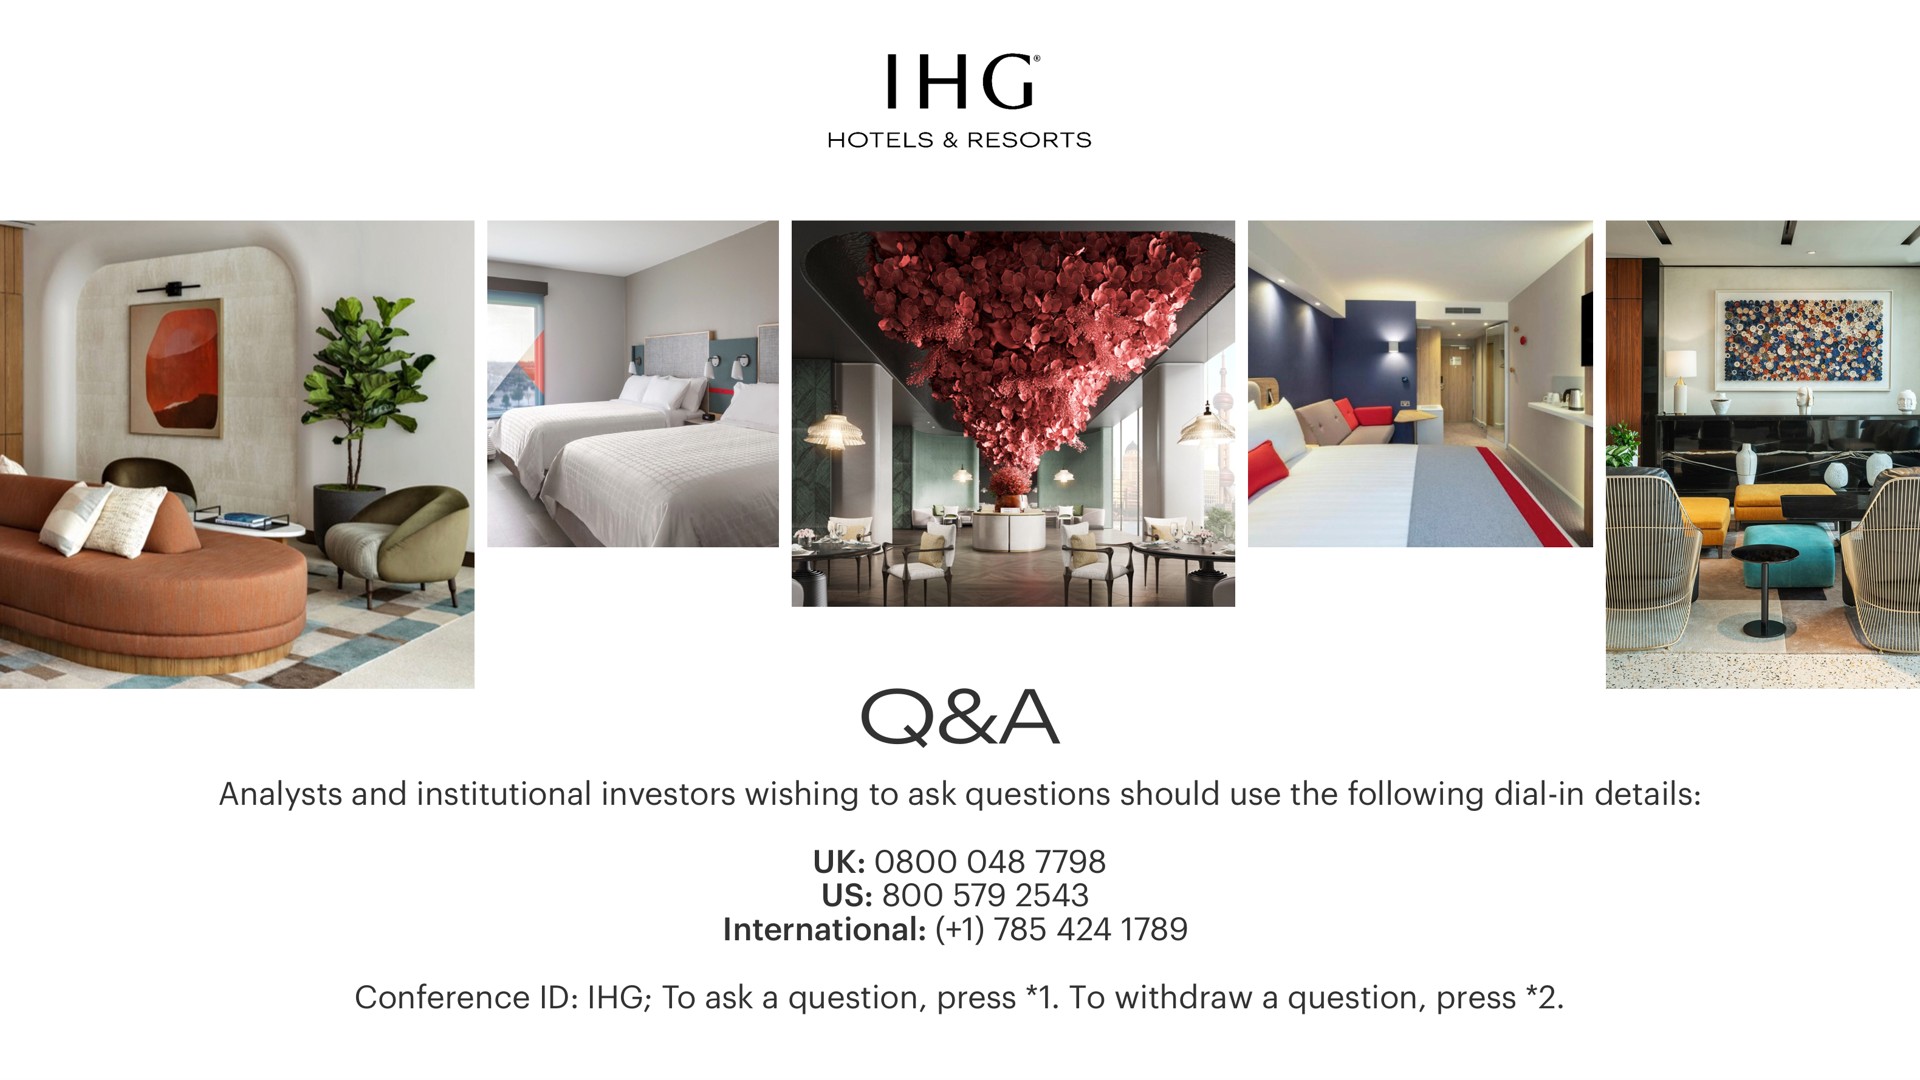 a | IHG Hotels